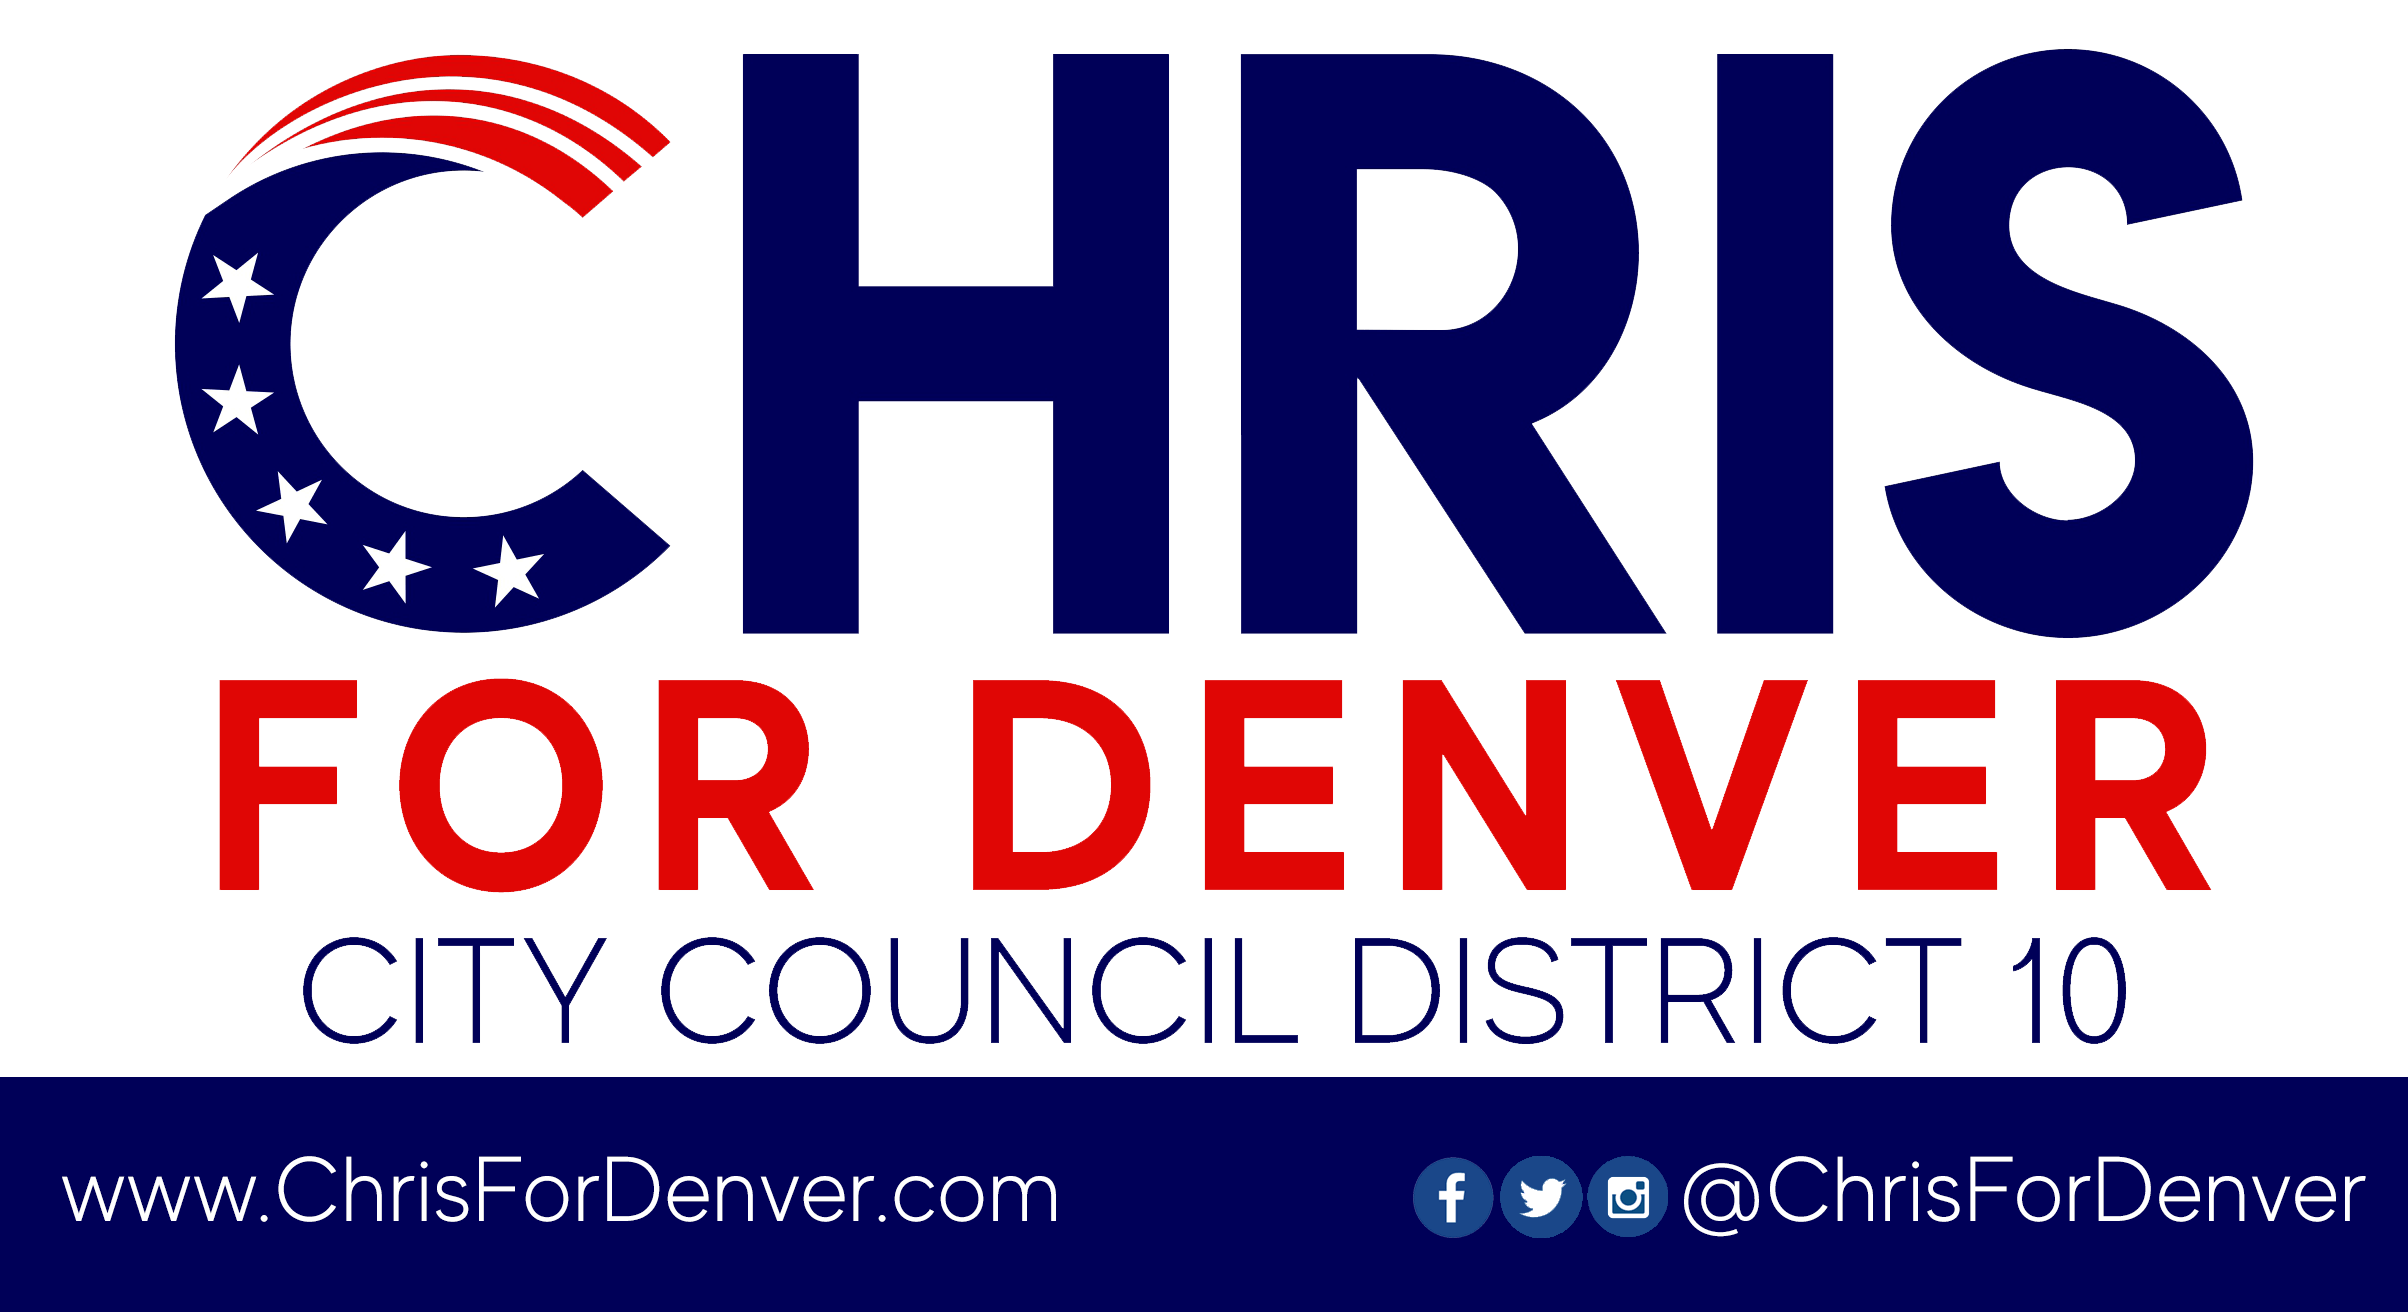 City of Denver Logo - Chris Hinds for Denver City Council is 2019!